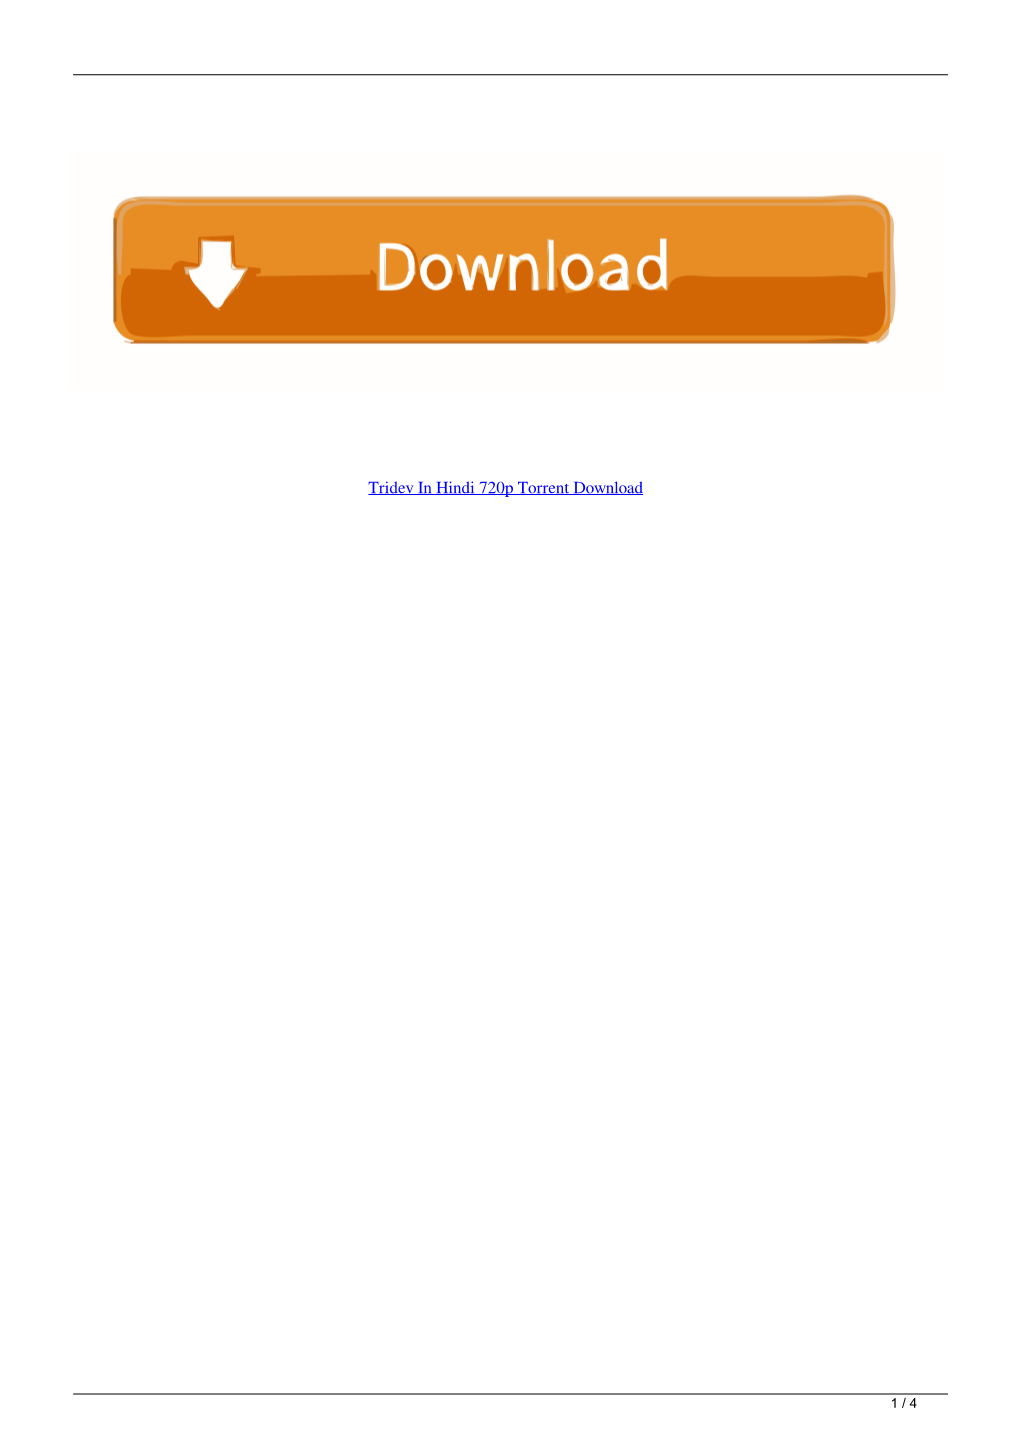 Tridev in Hindi 720P Torrent Download